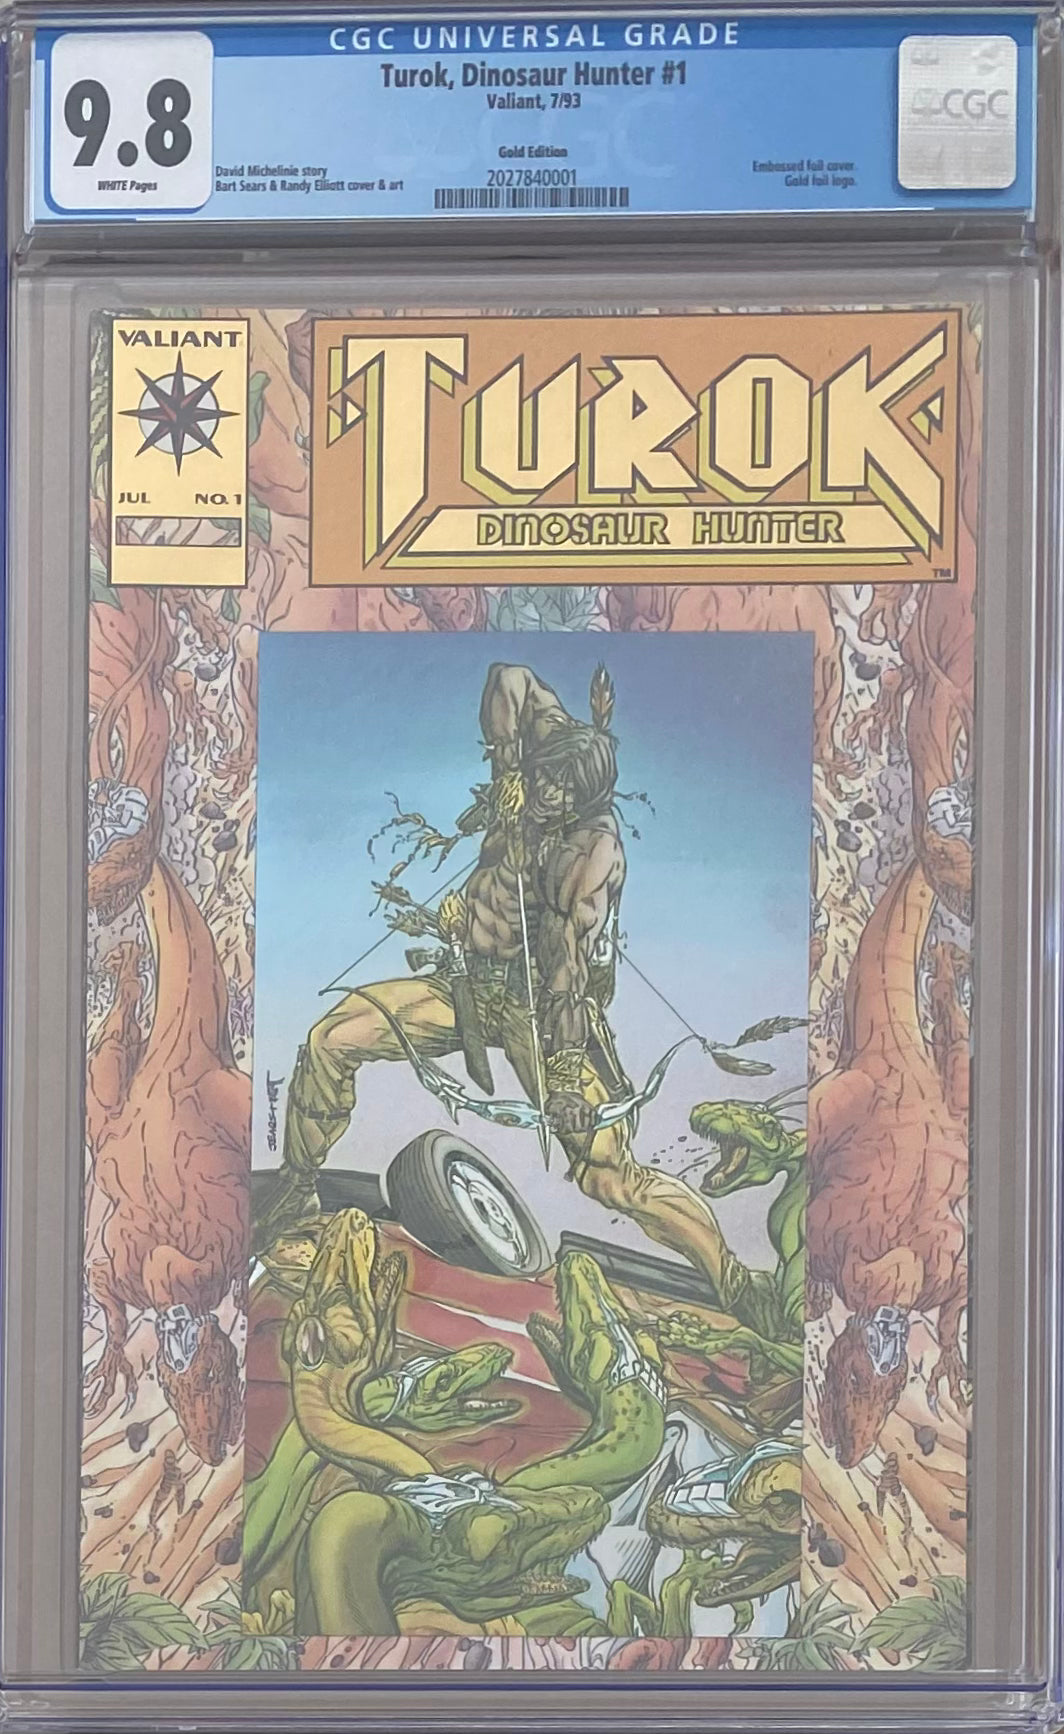 Turok, Dinosaur Hunter #1 Gold Edition #1 CGC 9.8